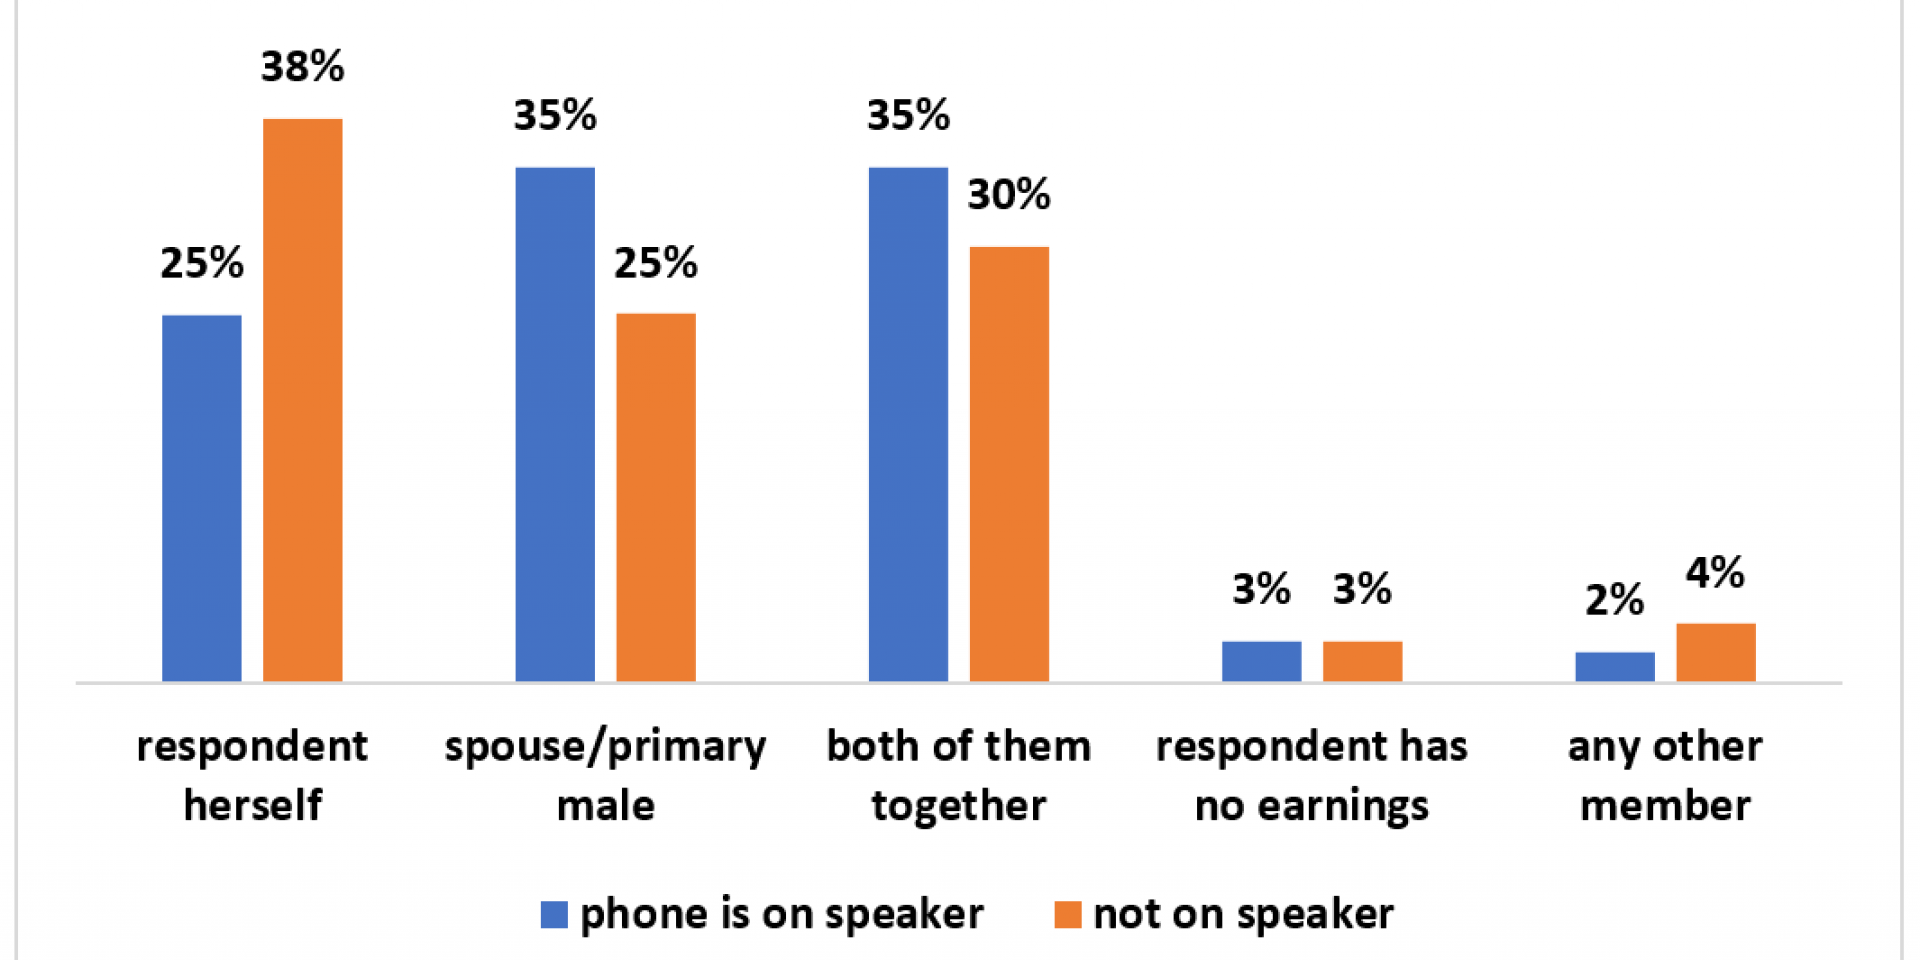 Data on a phone survey